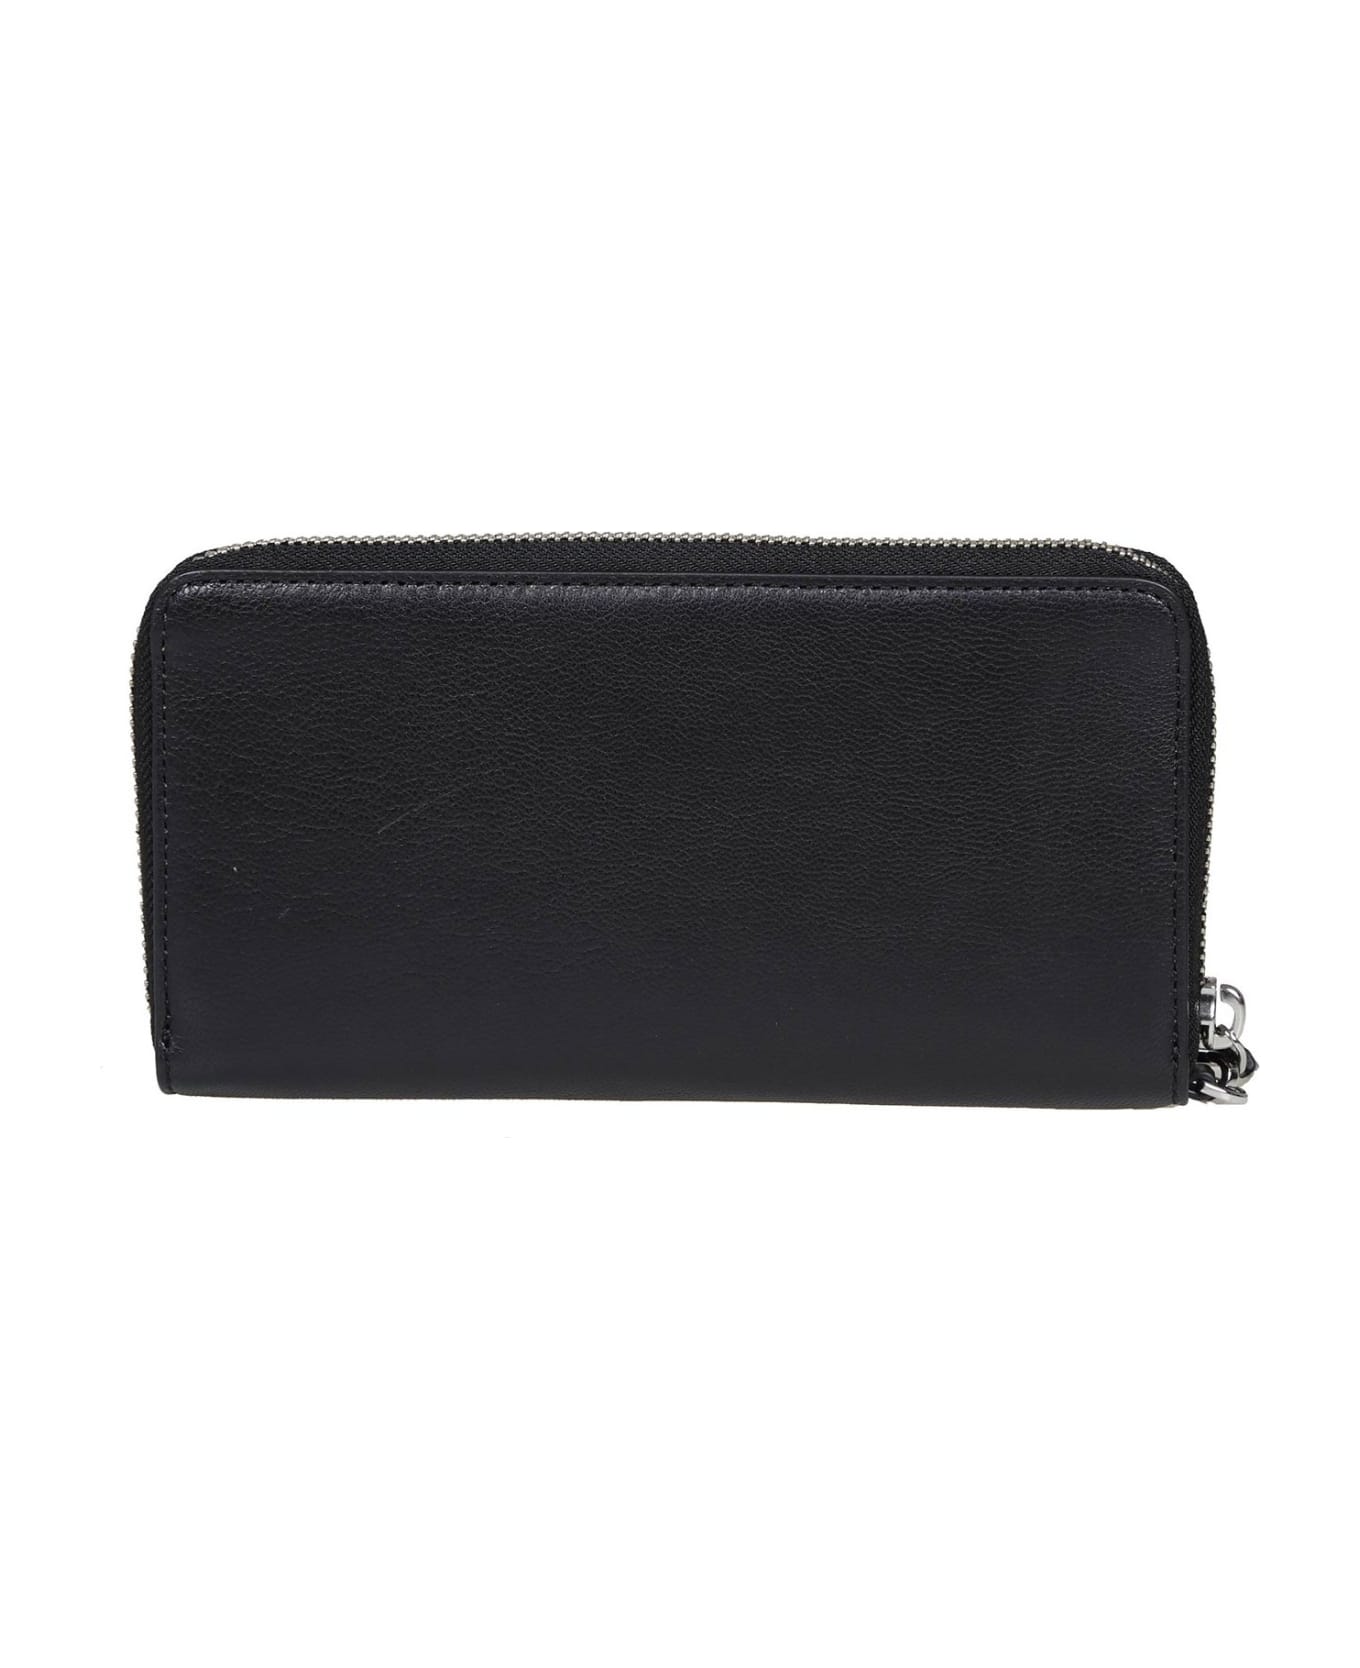 Marc Jacobs Wallet In Black Leather - Black